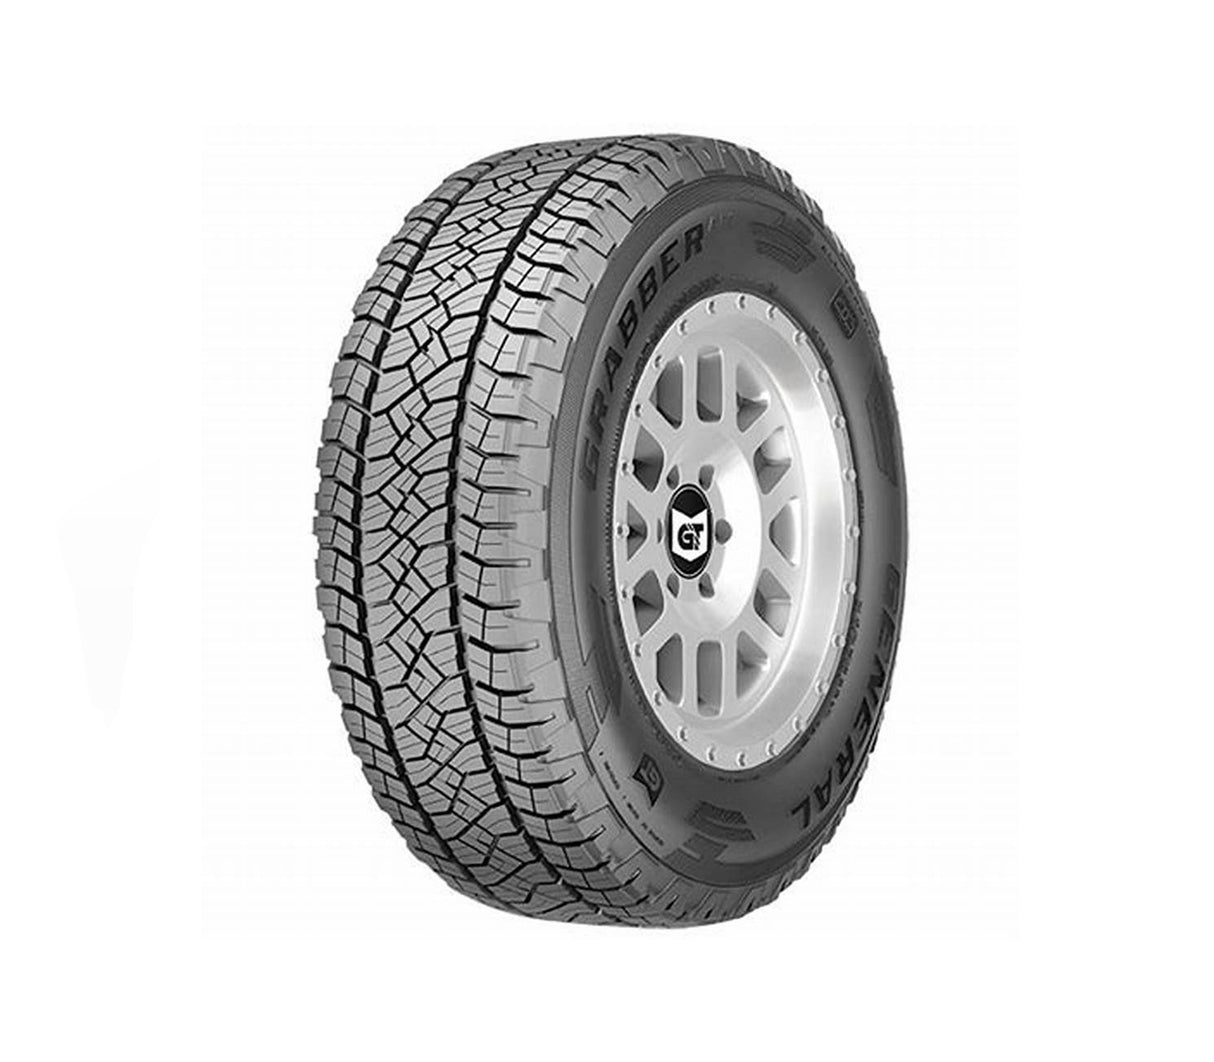 Neumático 235/85R16 120/116S A/TX Grabber General